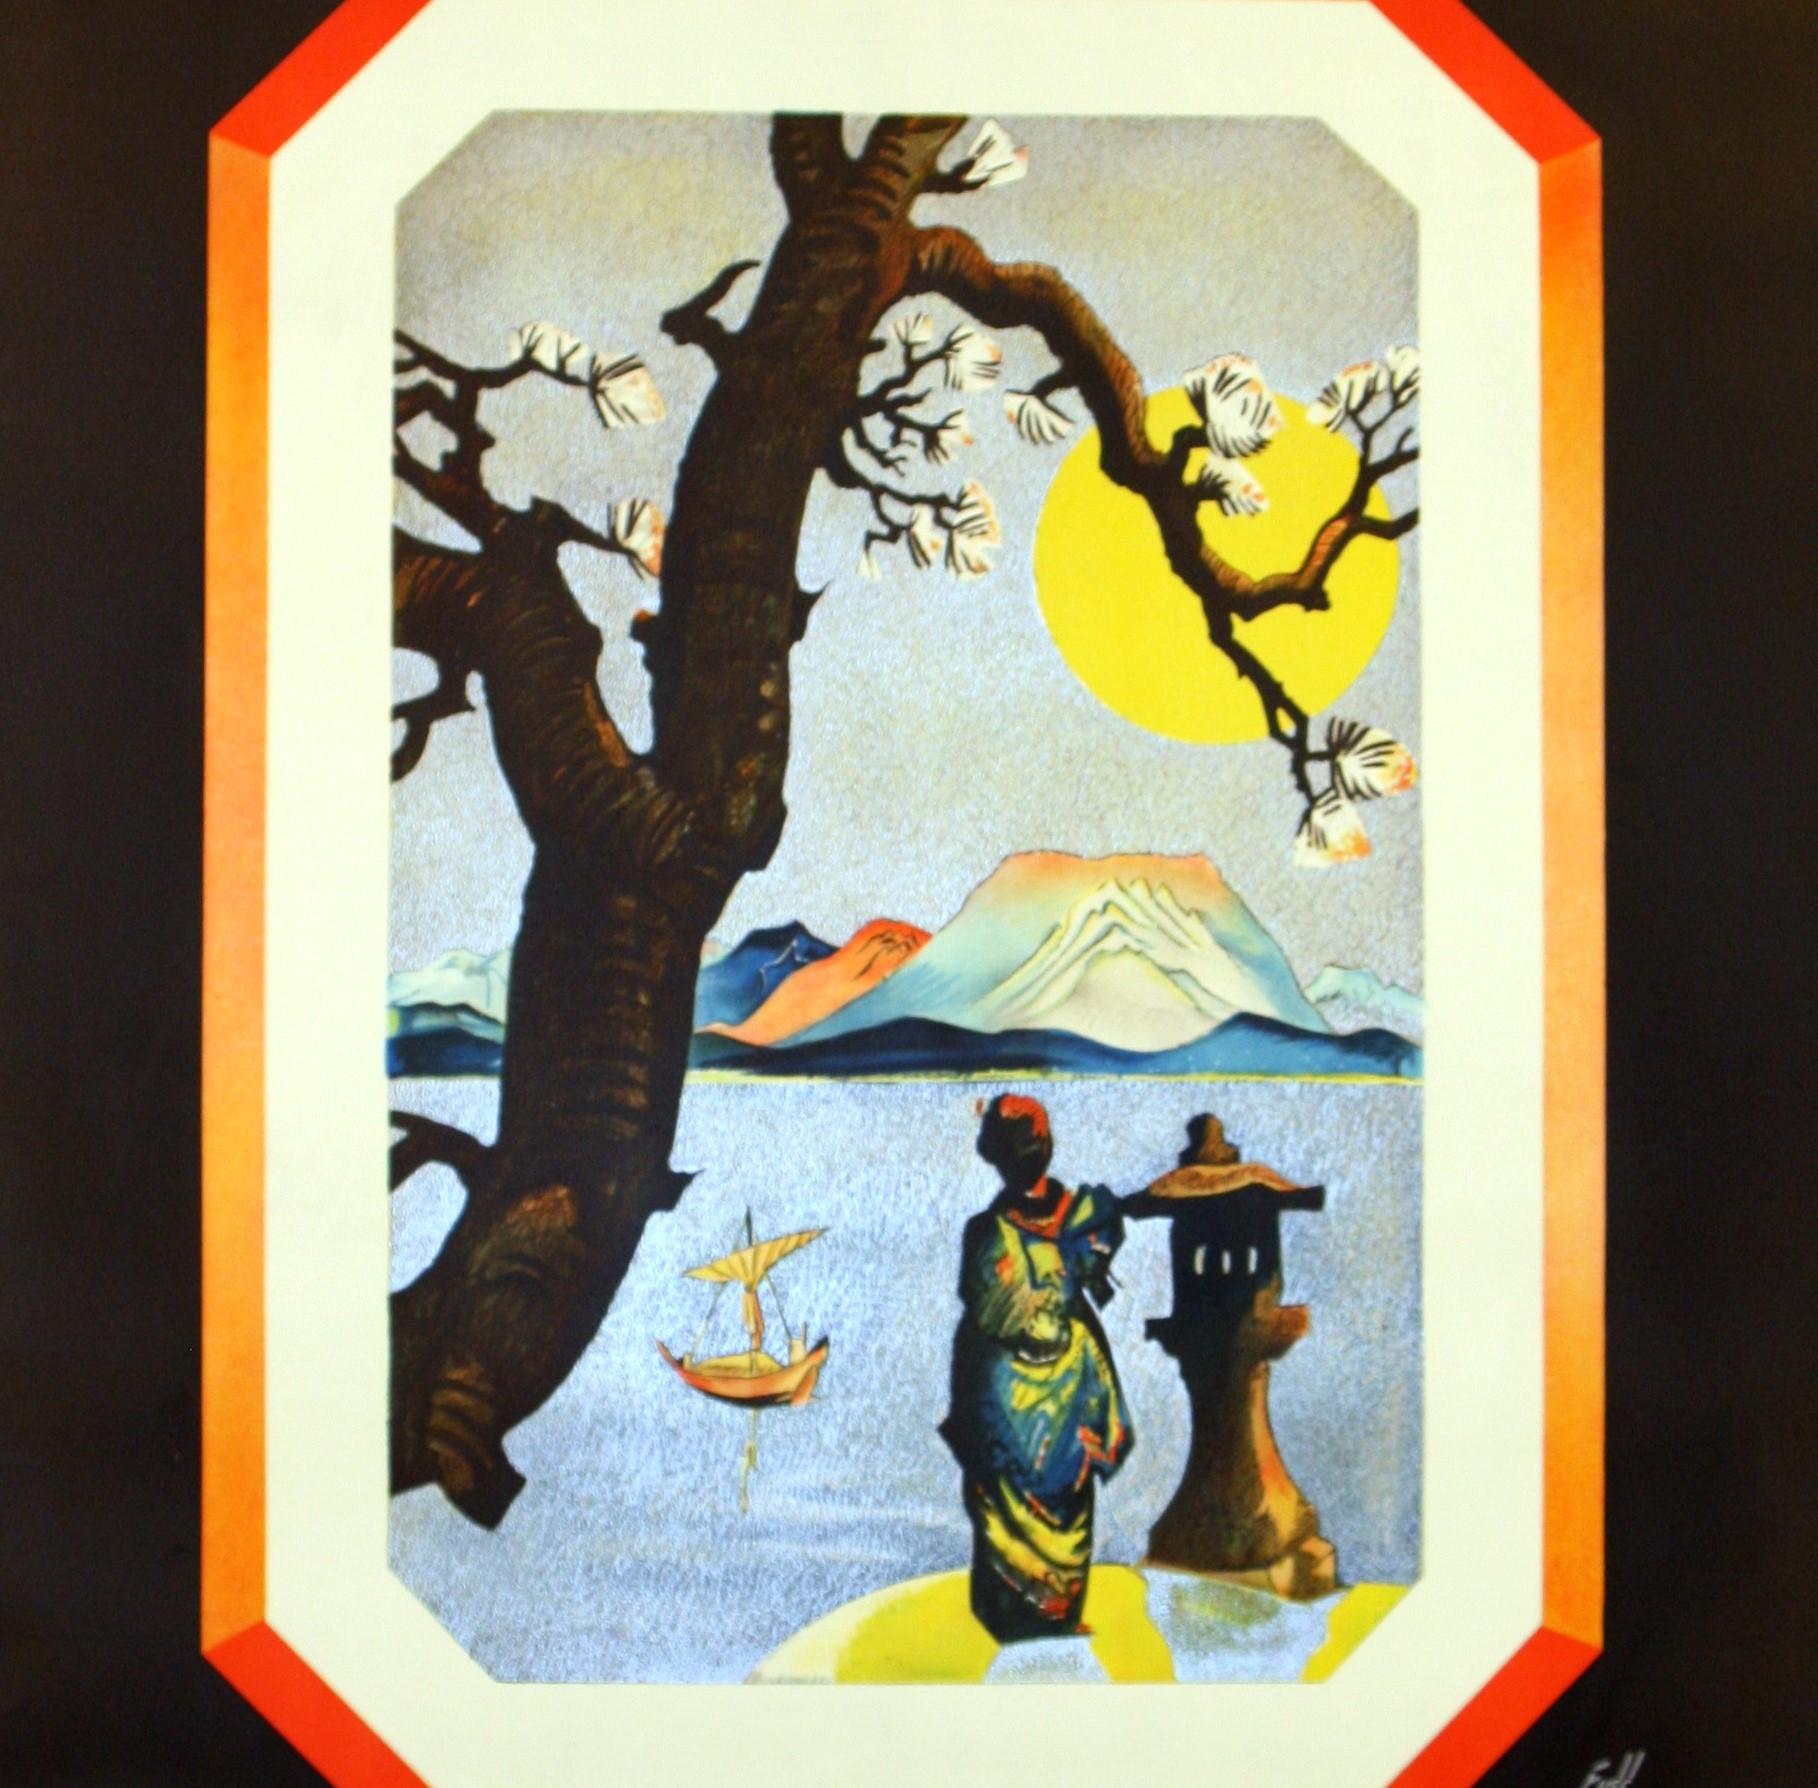 German Original Vintage 1930s Art Deco HAPAG Cruise Liner Poster To The Far East Japan